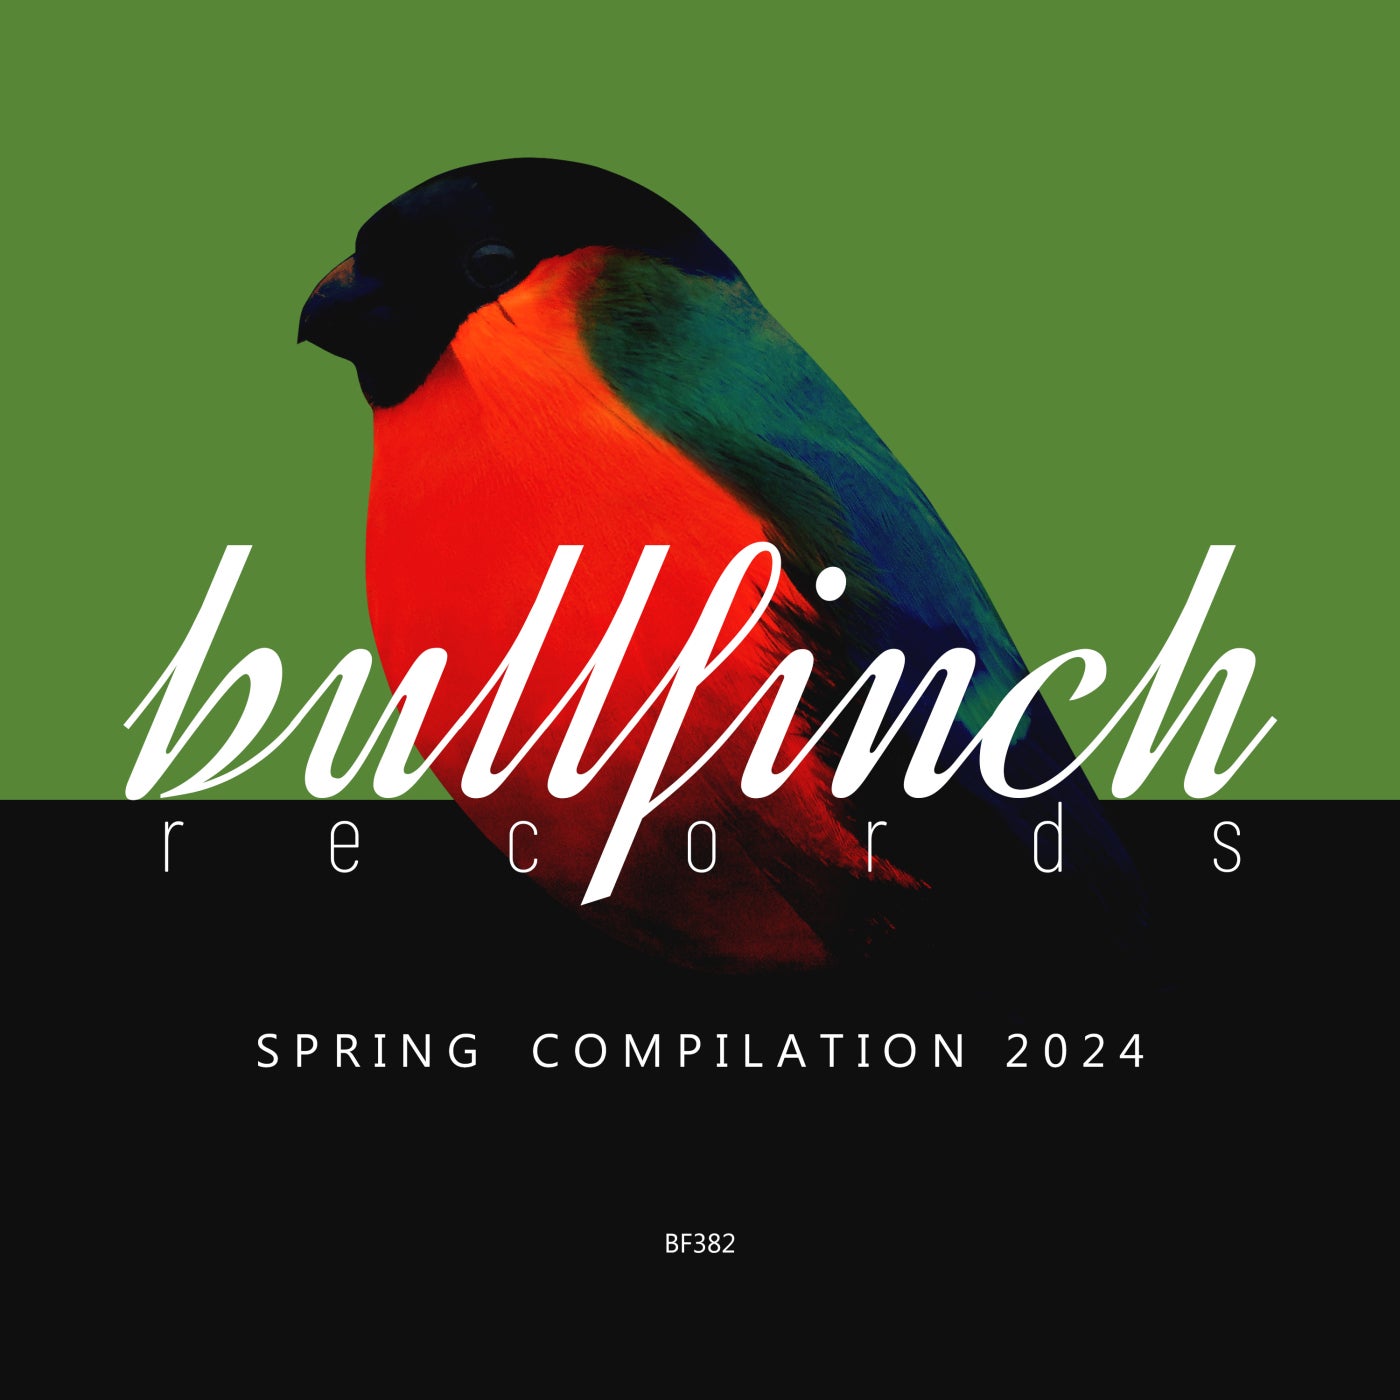 Bullfinch Spring 2024 Compilation